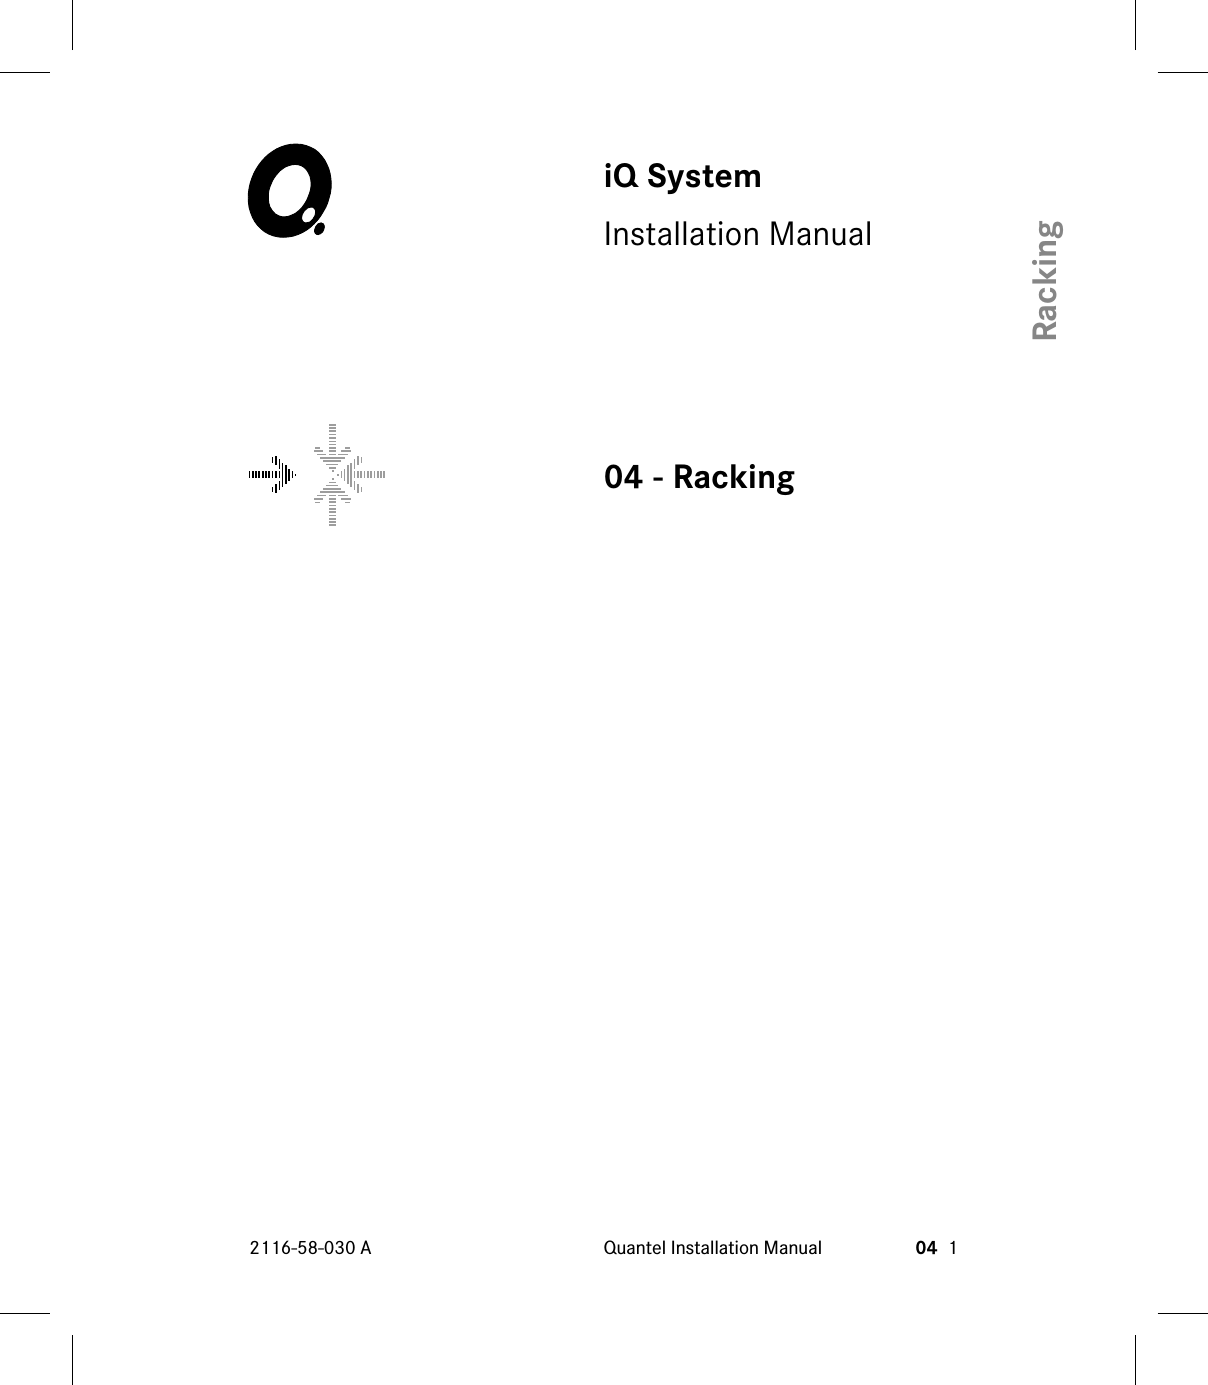 iQ SystemInstallation Manual04 - Racking2116-58-030 A Quantel Installation Manual 04 1Racking